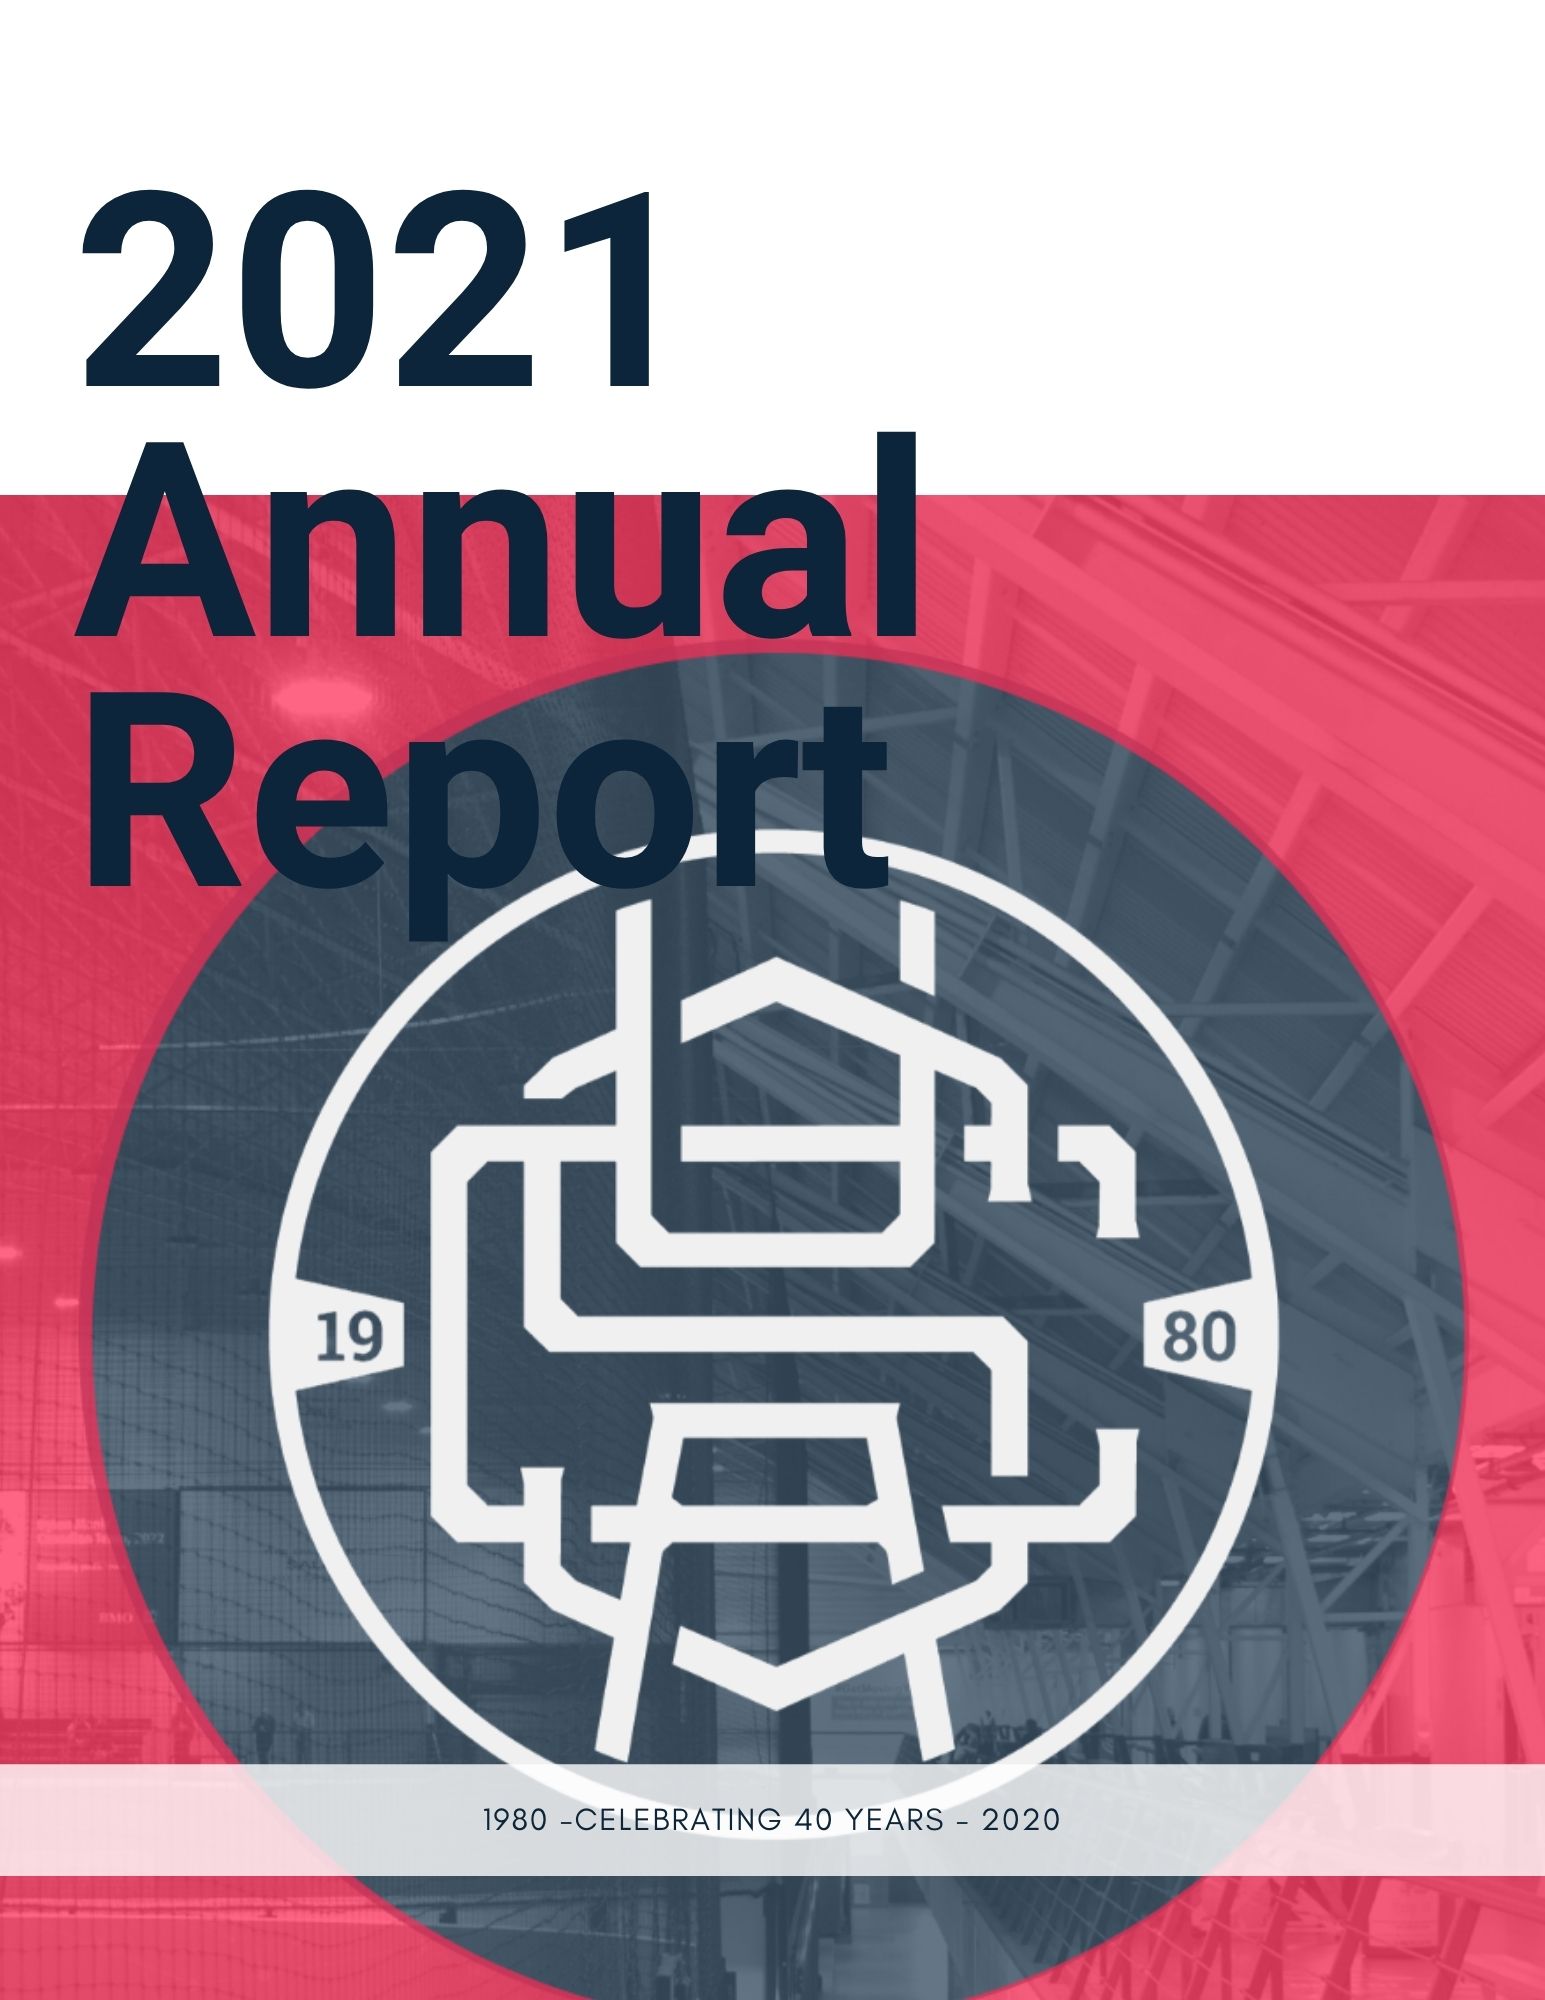 2021 Annual Report Image